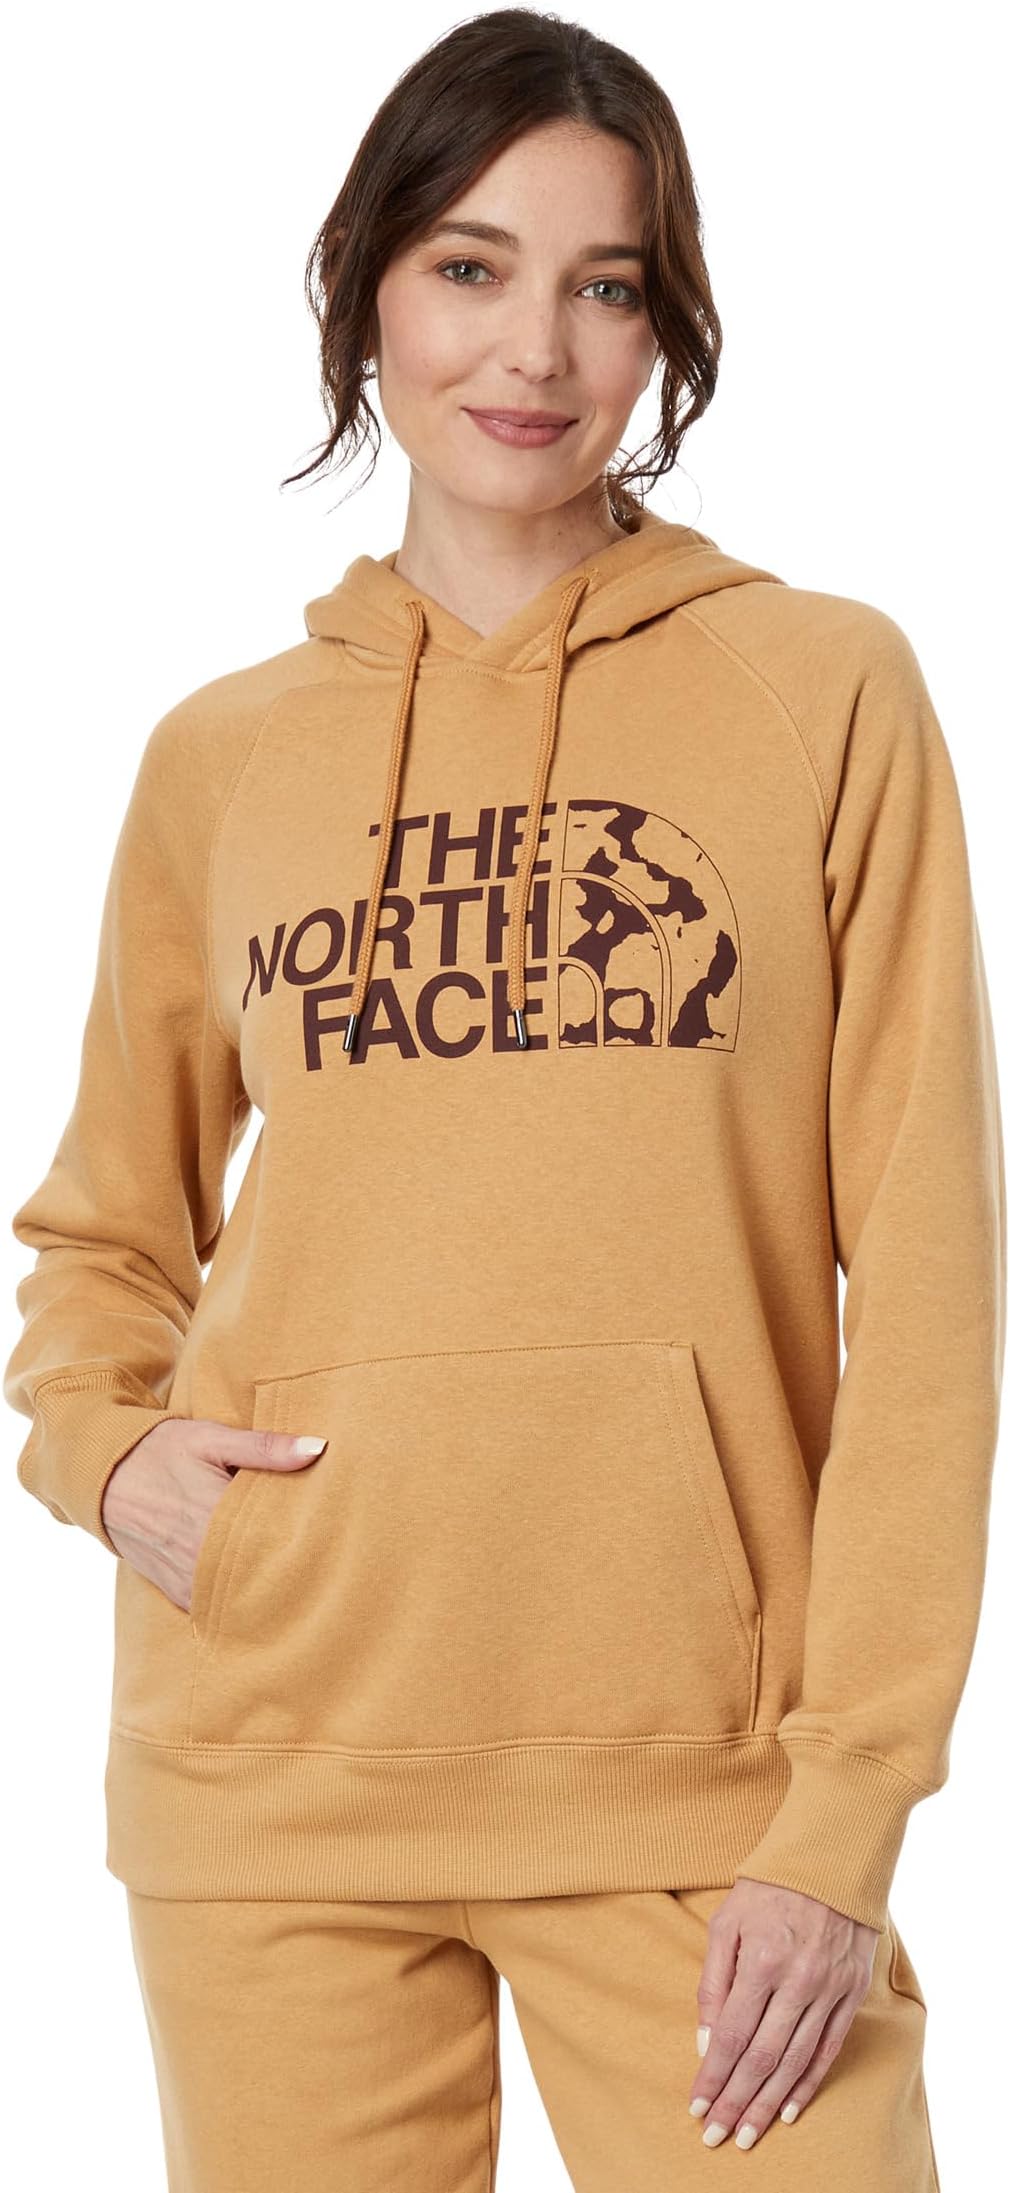 Пуловер с капюшоном и полукуполом The North Face, цвет Almond Butter куртка the north face heritage stuffed coach цвет almond butter